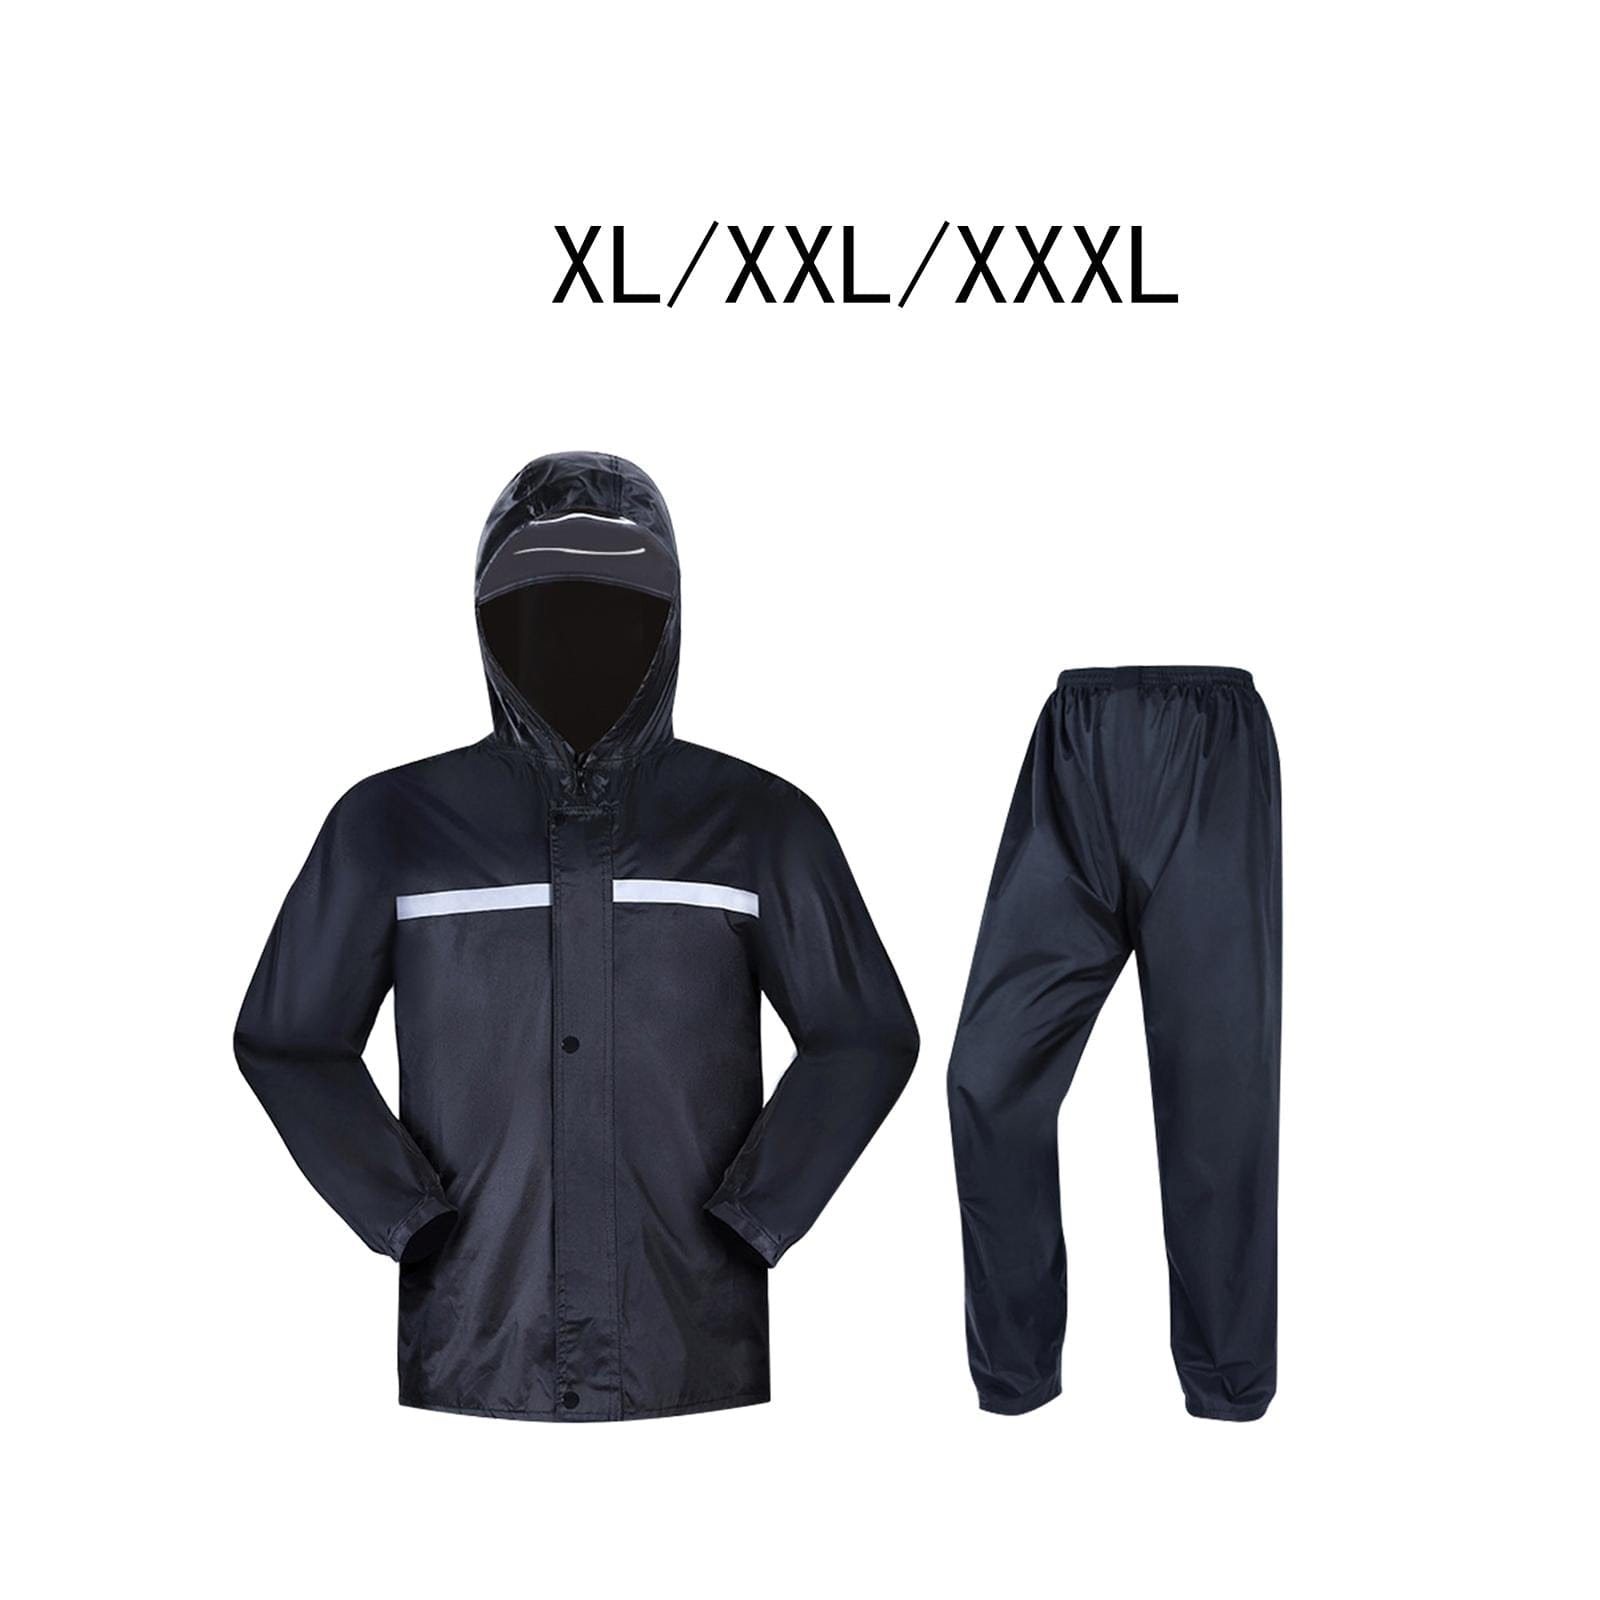 MIERSPORT Rain Suit Waterproof Jacket Breathable Rain Coat Pants Adults Women Men, XXXL